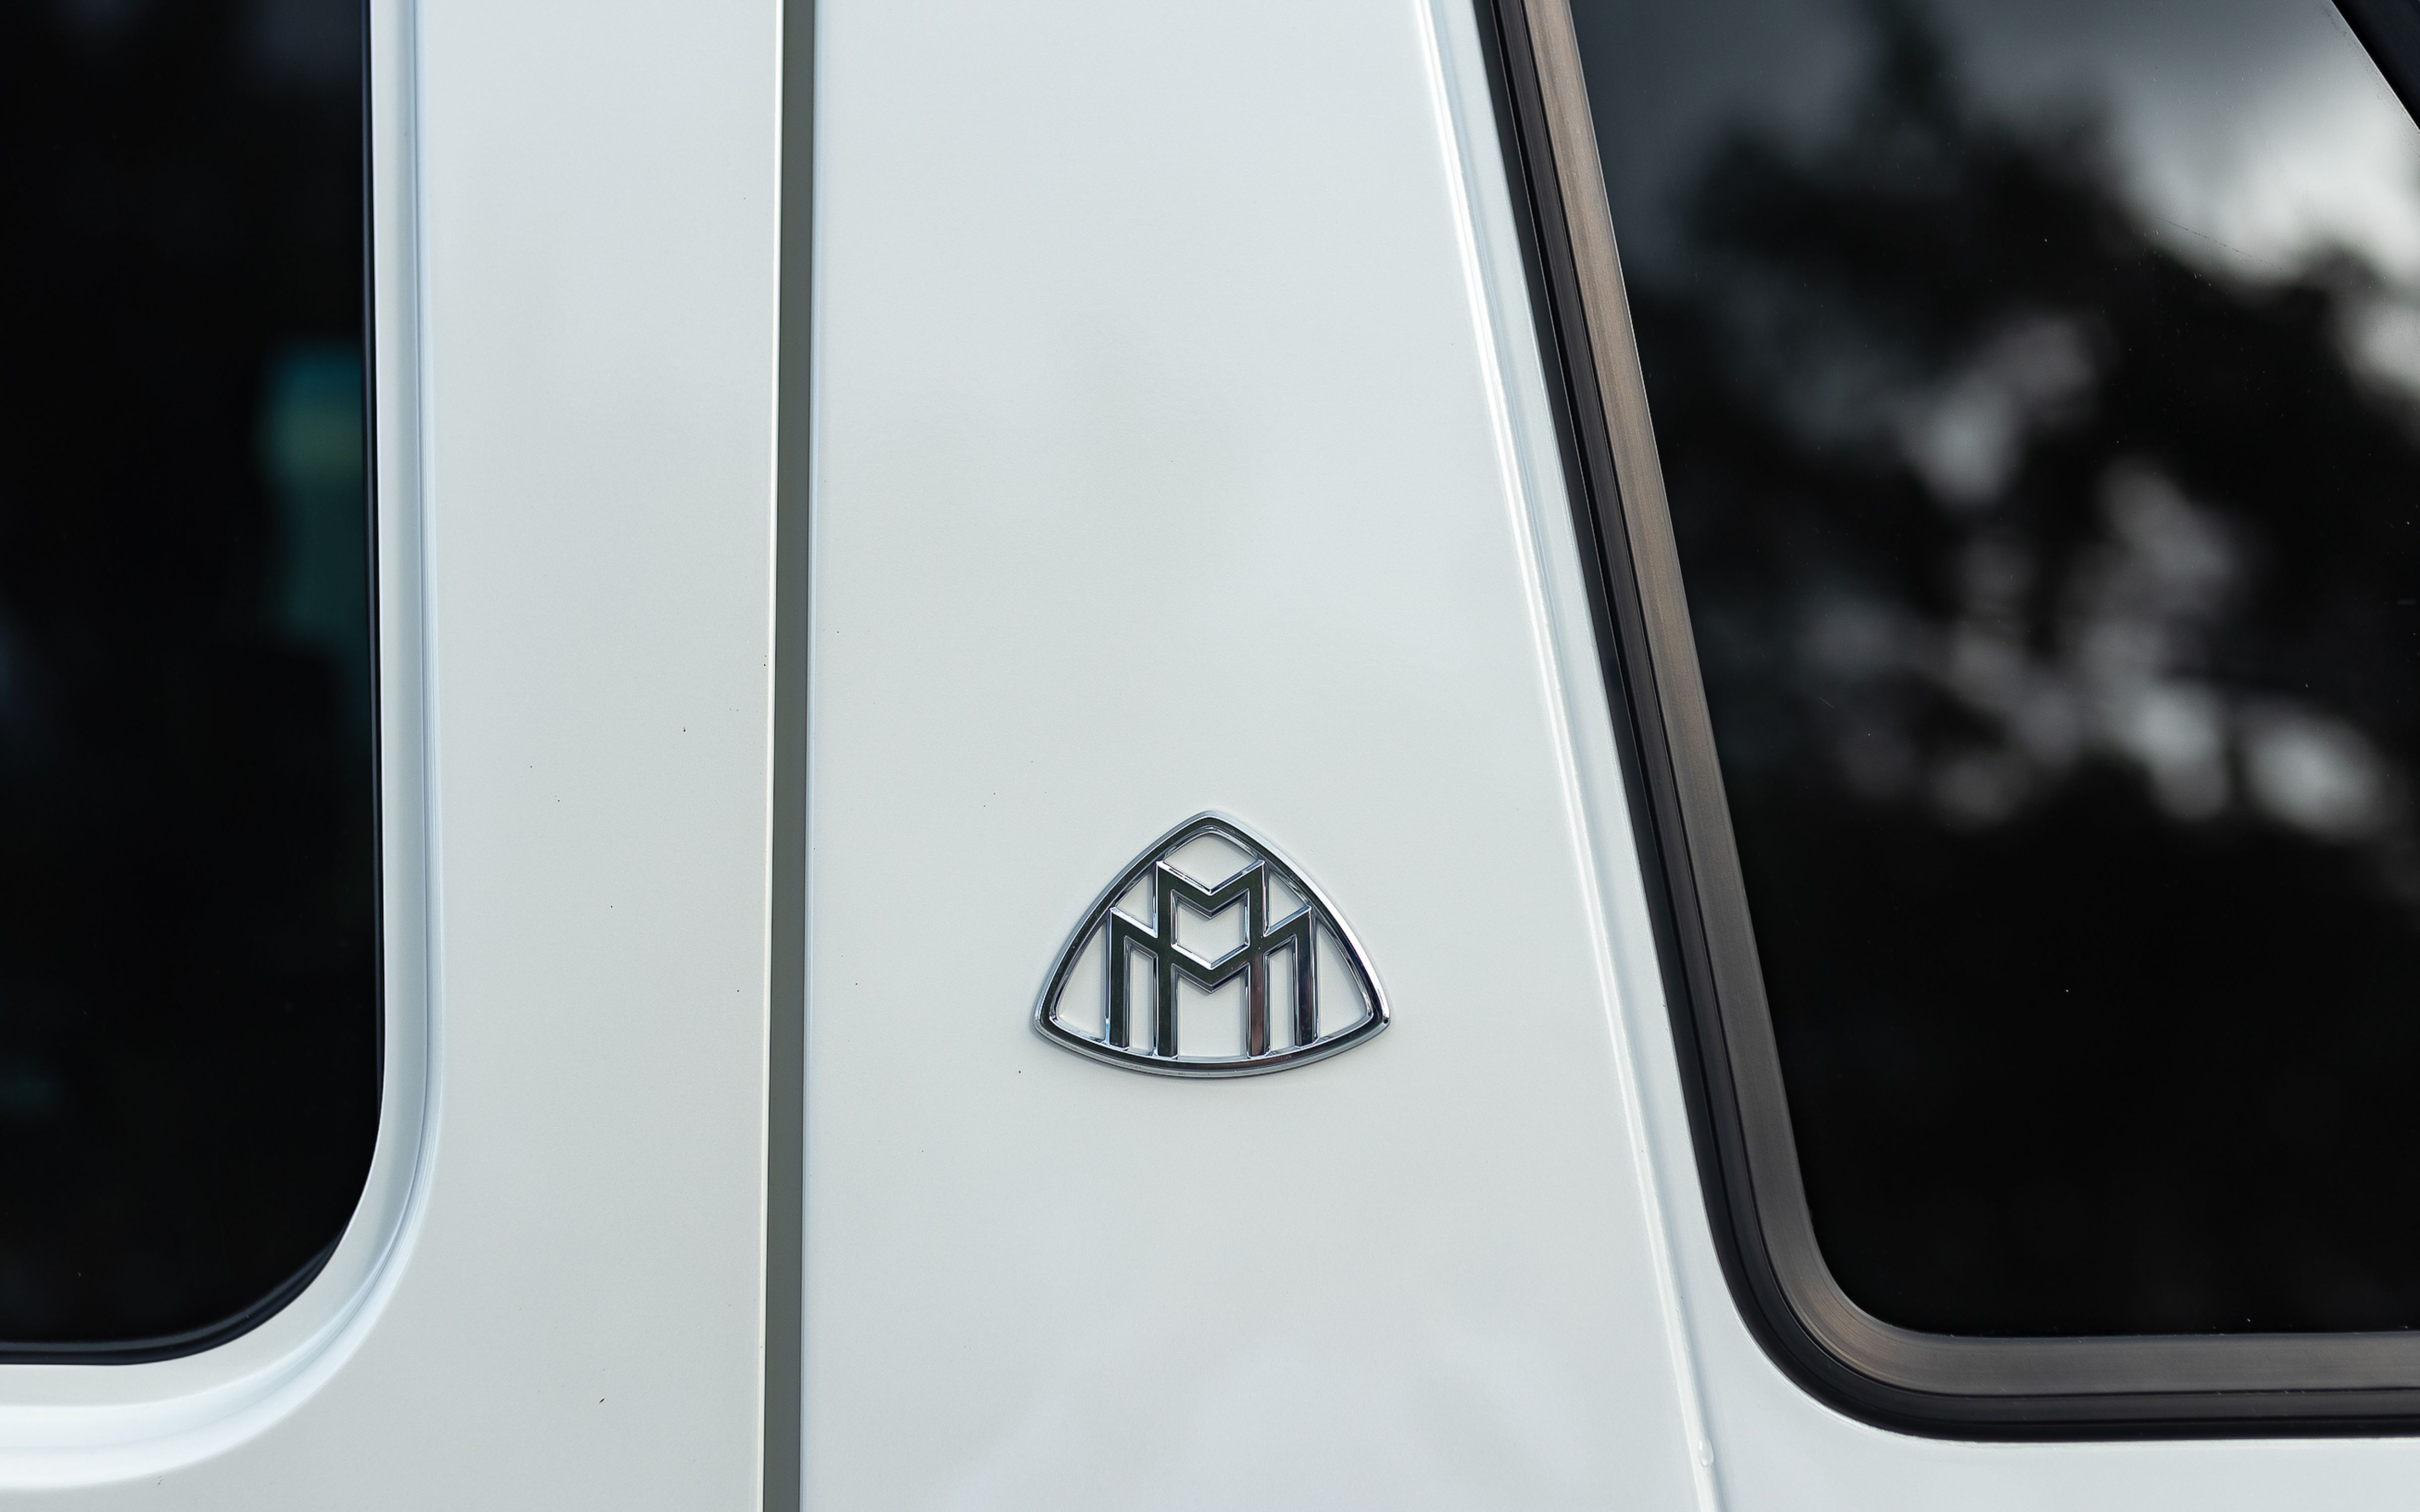 400-Mile 2018 Mercedes-Maybach G650 Landaulet 1 of 99